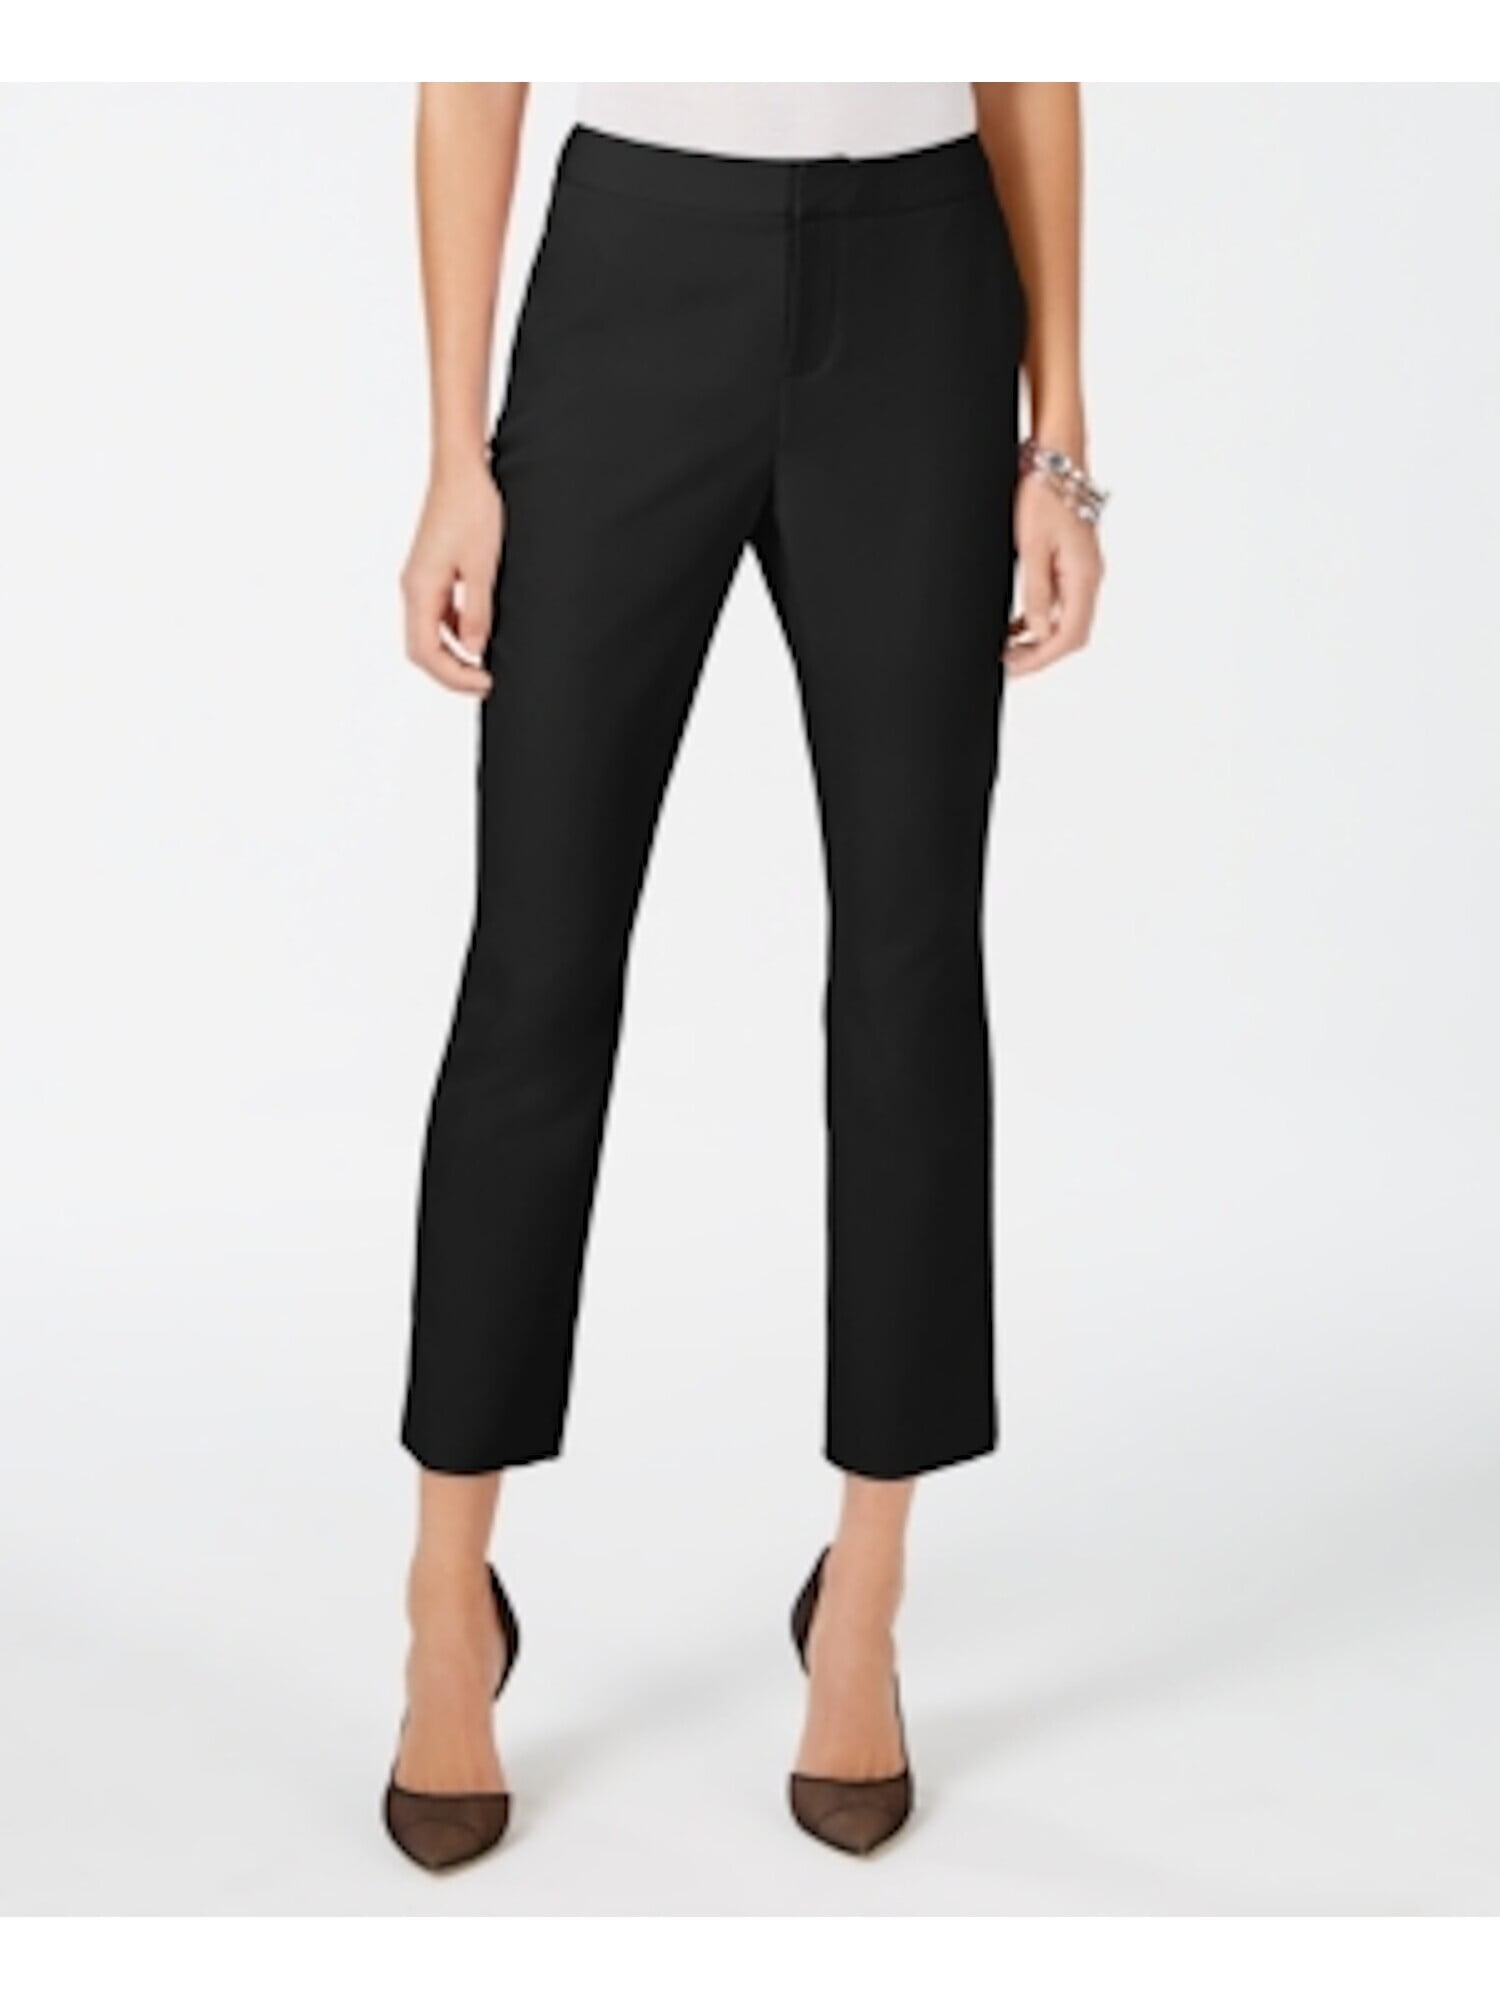 INC - INC Womens Black Wear To Work Pants Size: 6 - Walmart.com ...